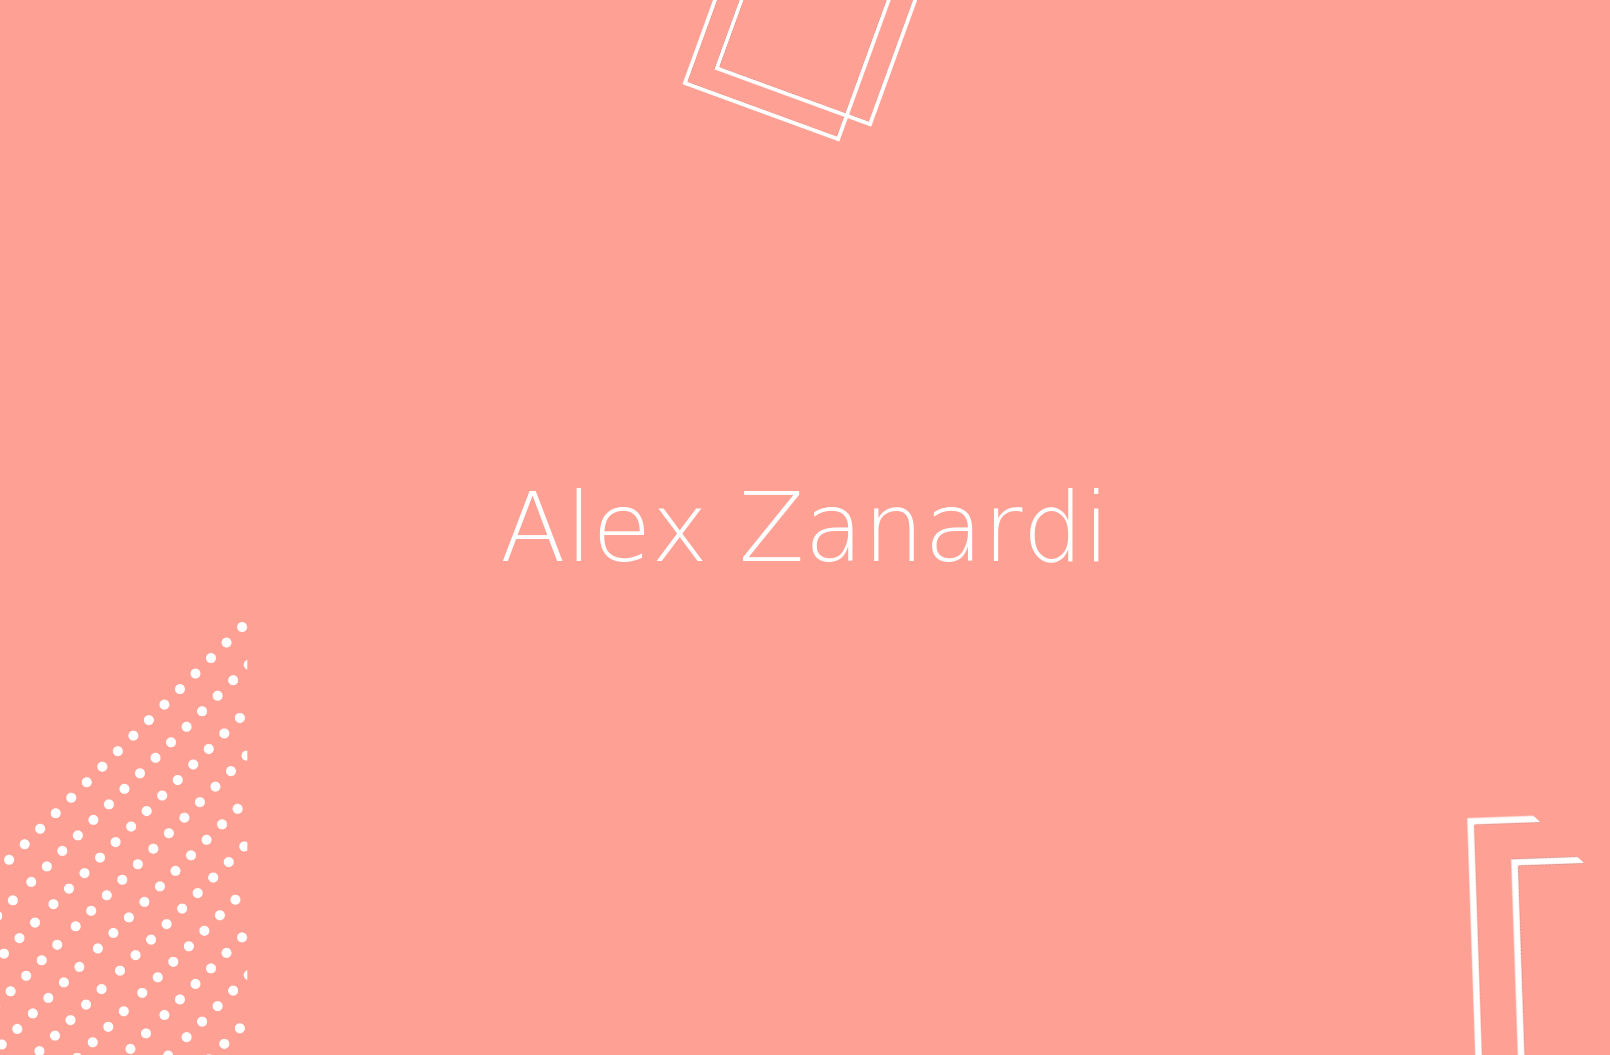 Biografía de Alex Zanardi